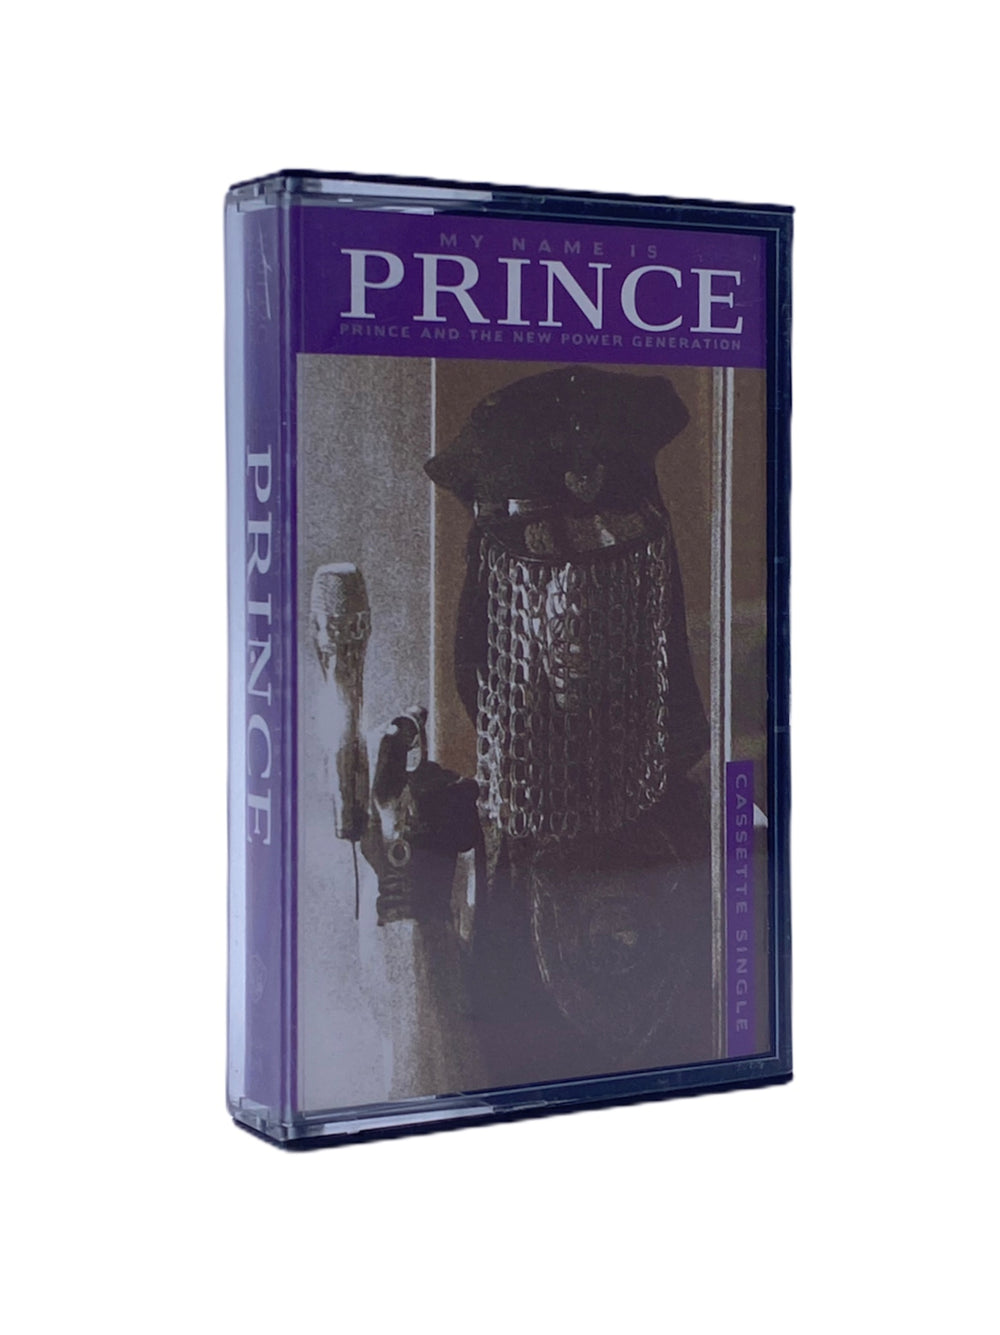 Prince My Name Is Prince 1992 Original Cassette Tape Single Cassingle SMS